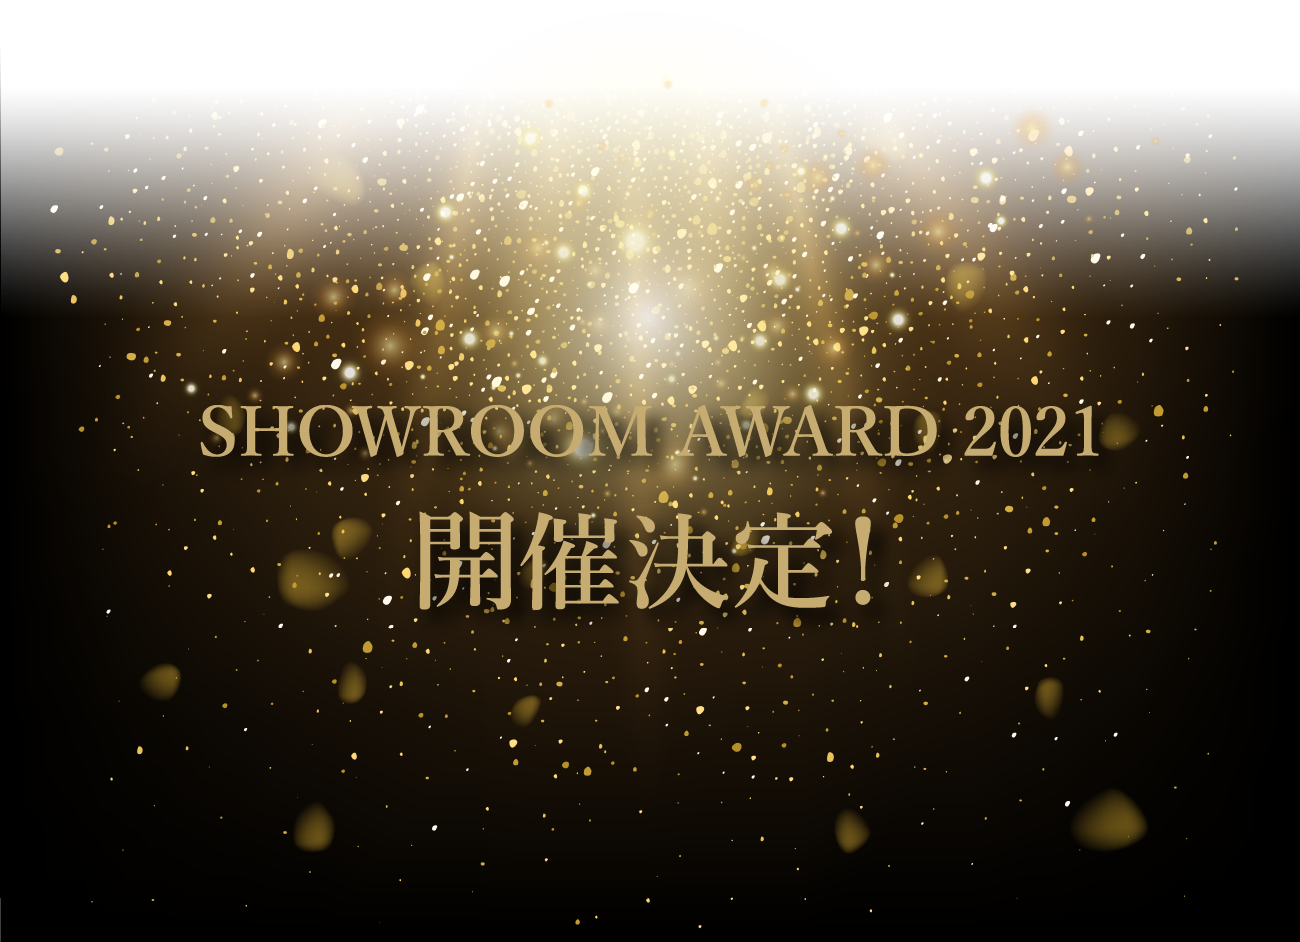 SHOWROOM AWARD 2021 開催決定！